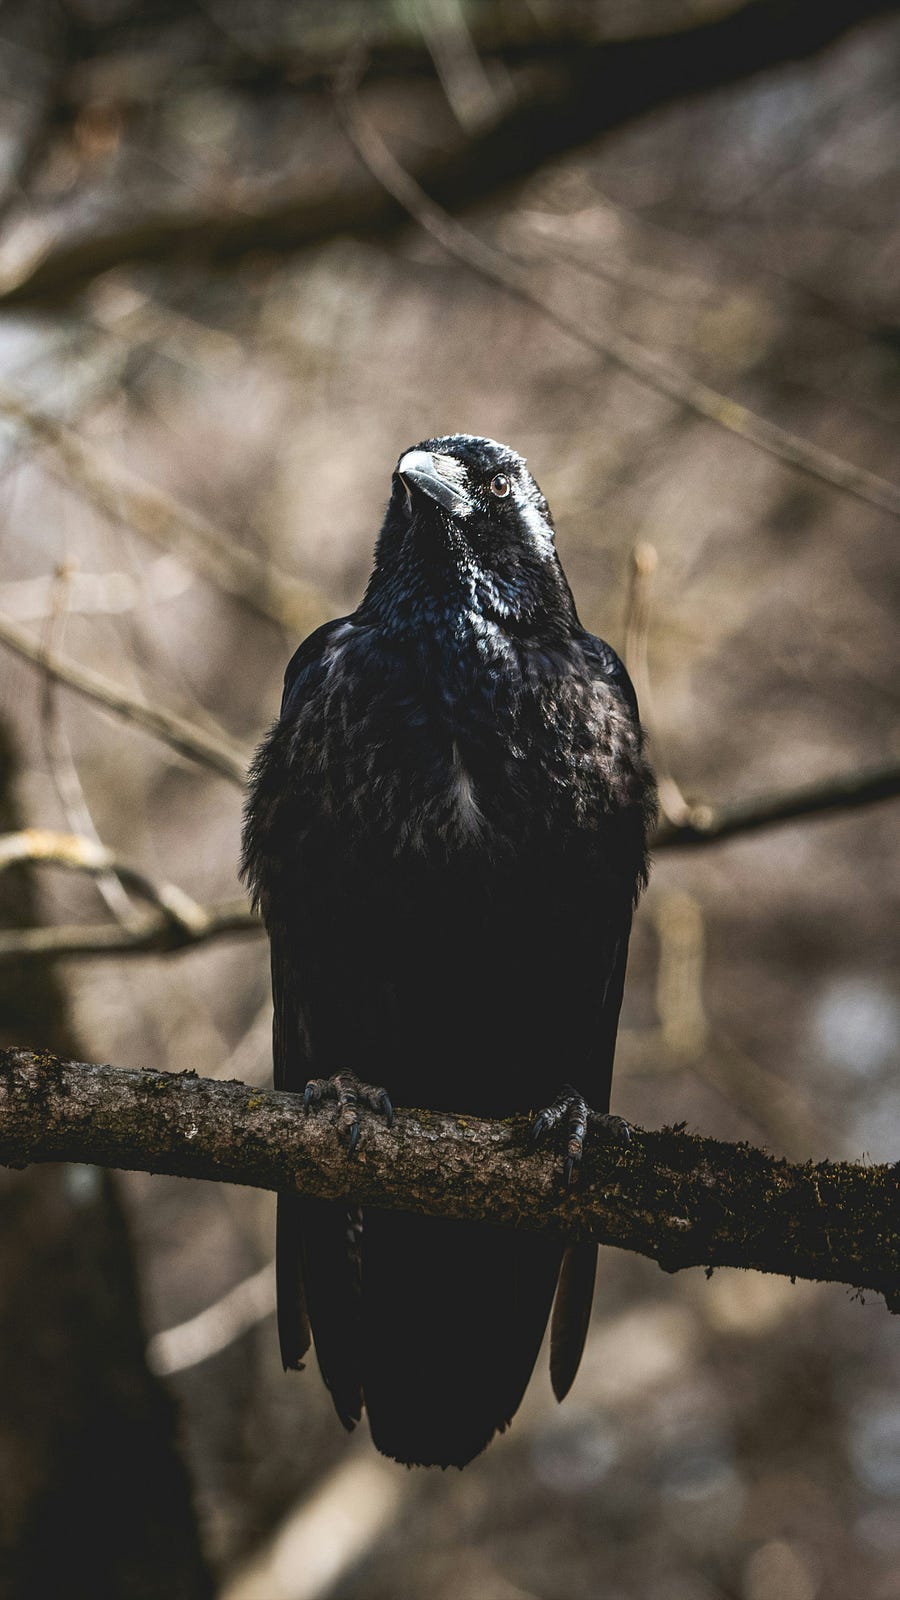 Black crow on a tree branch.